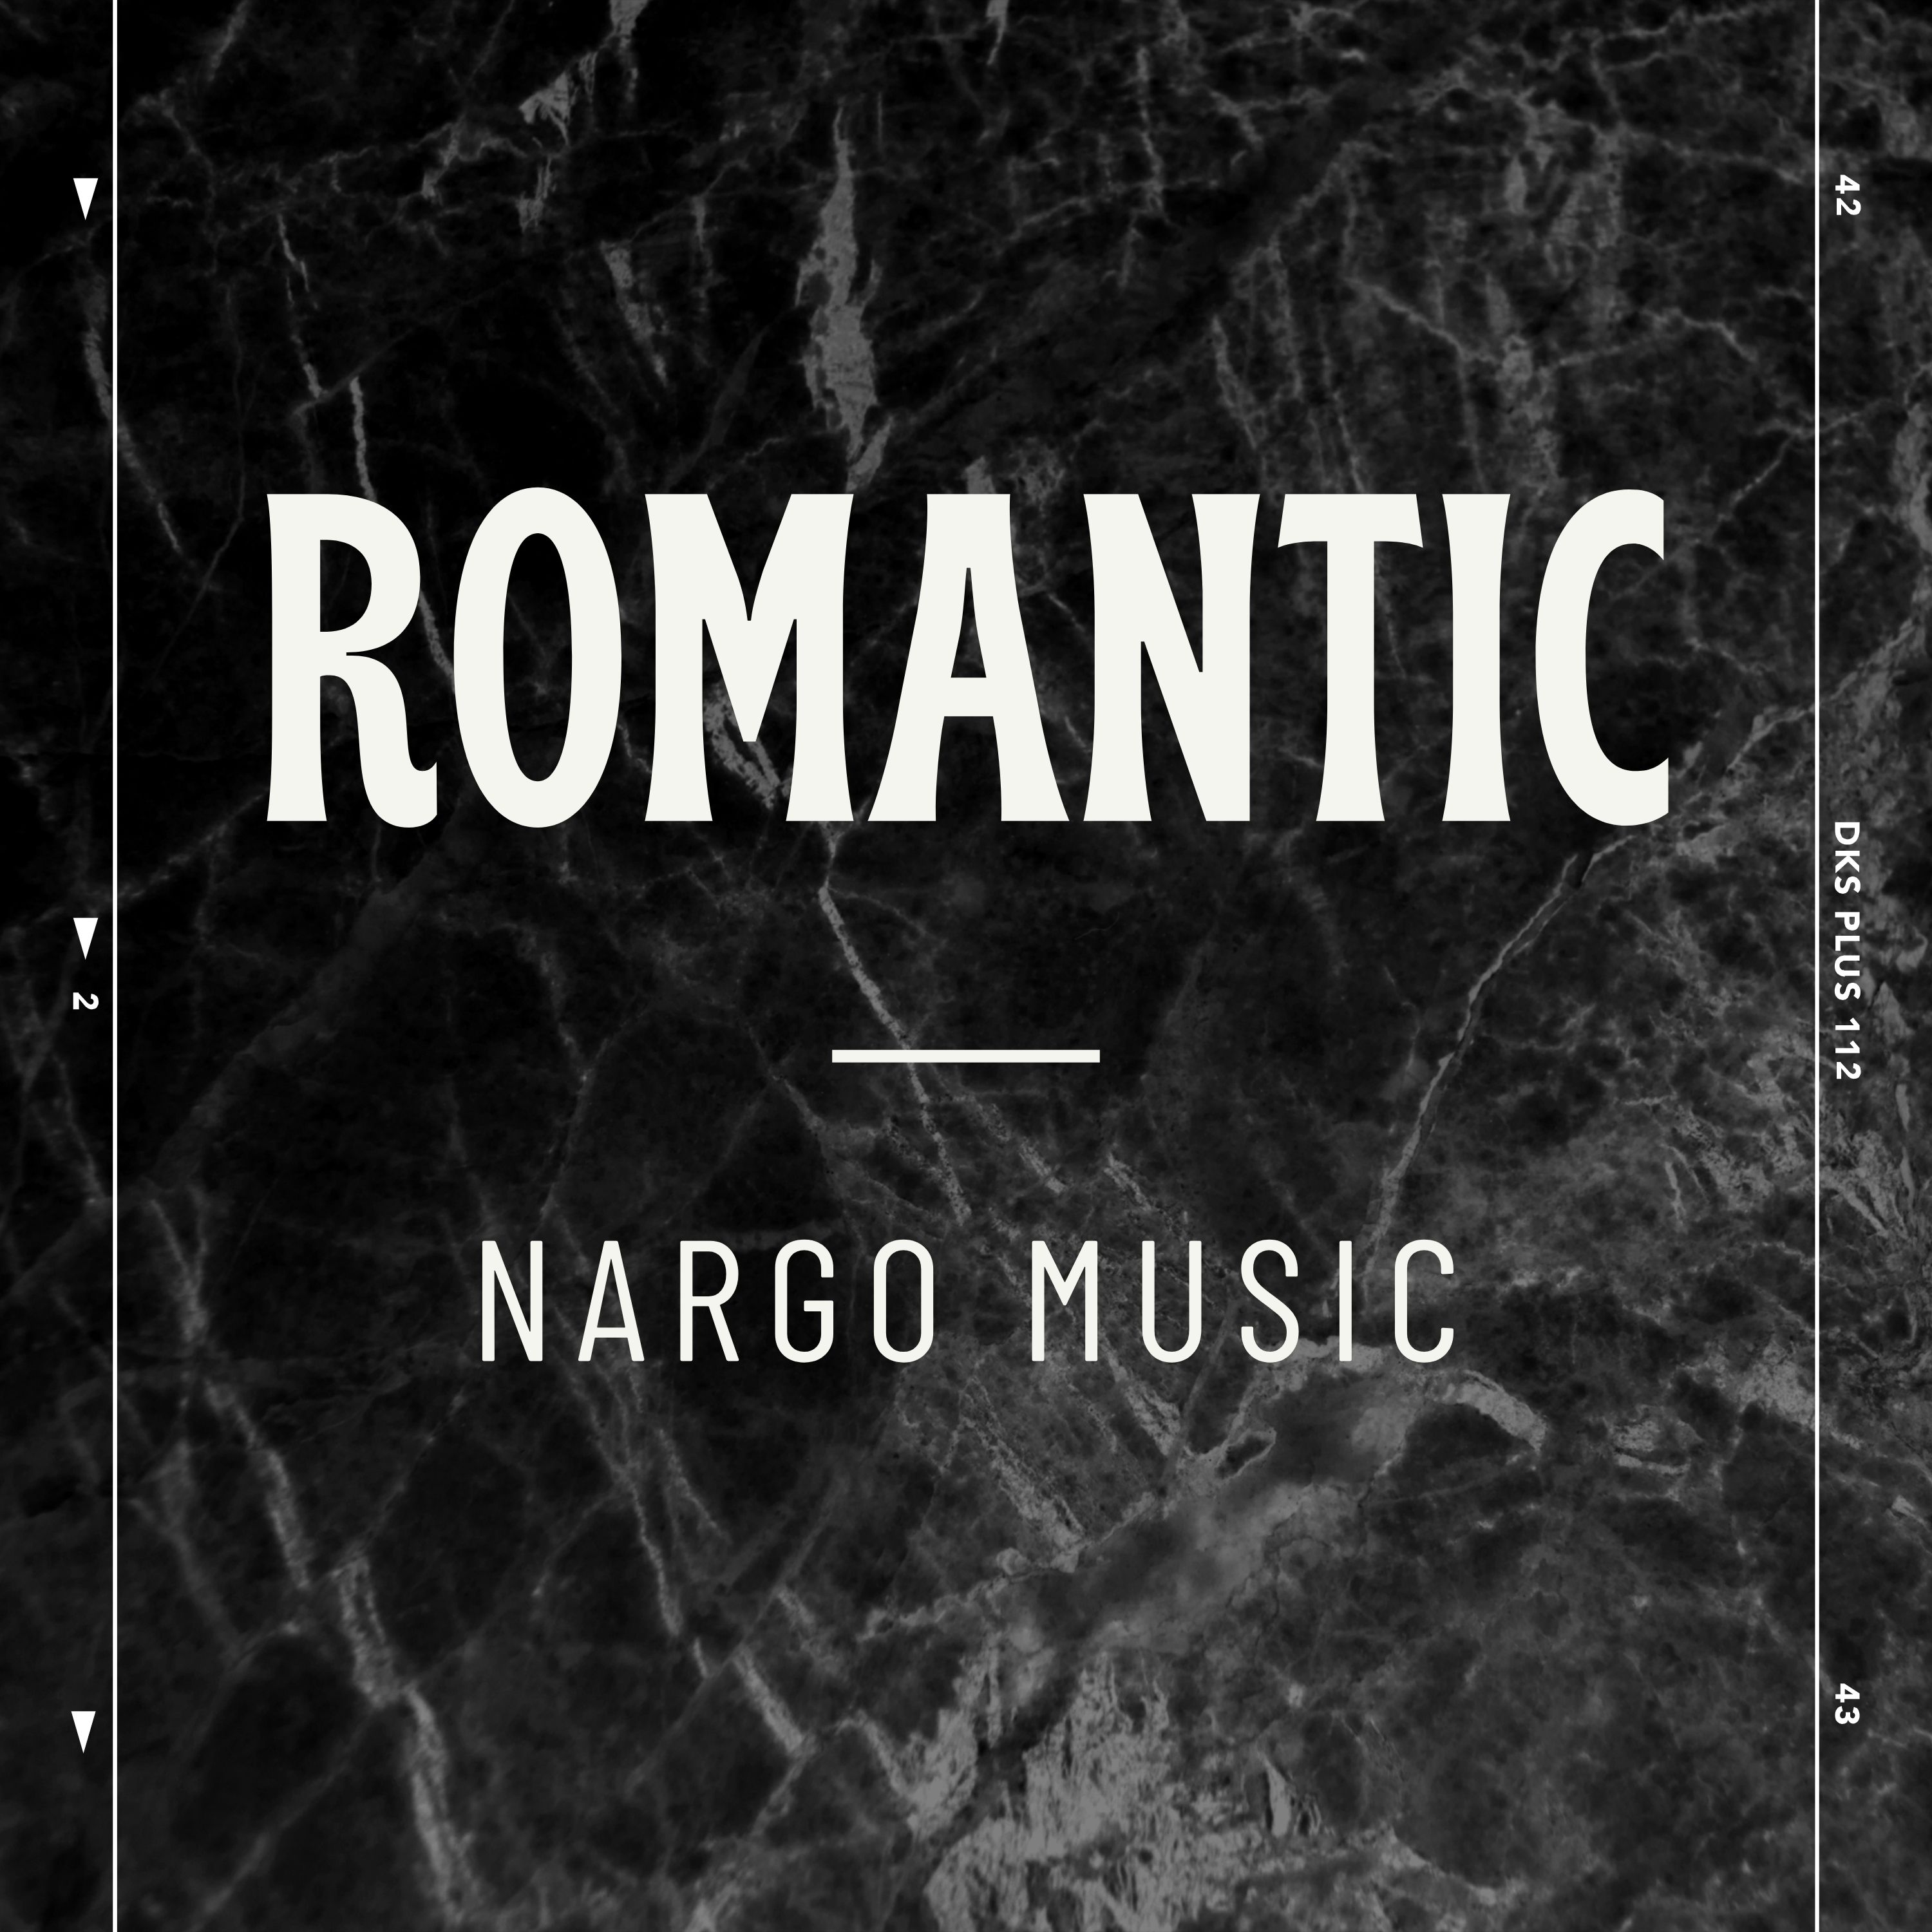 Emotional Romantic Music